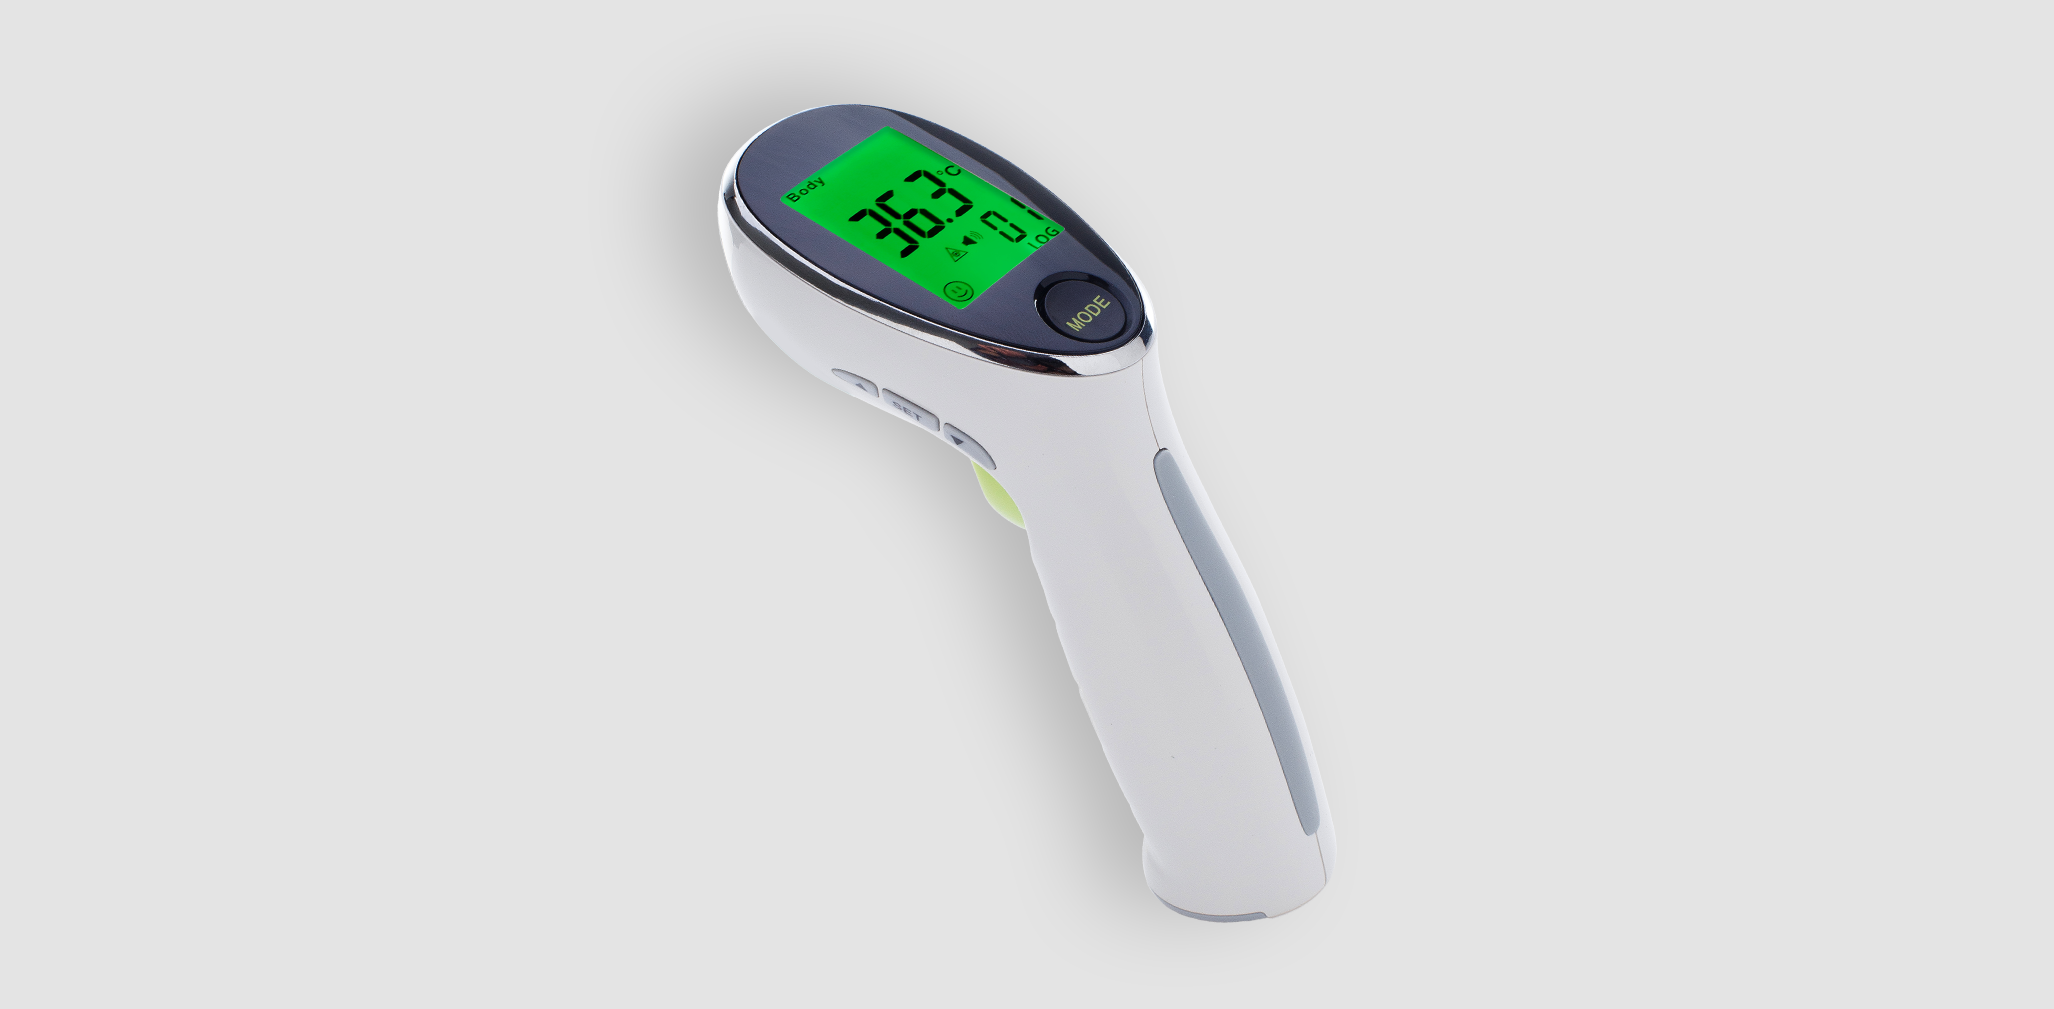 Infrared thermometer | Shotgun thermometer